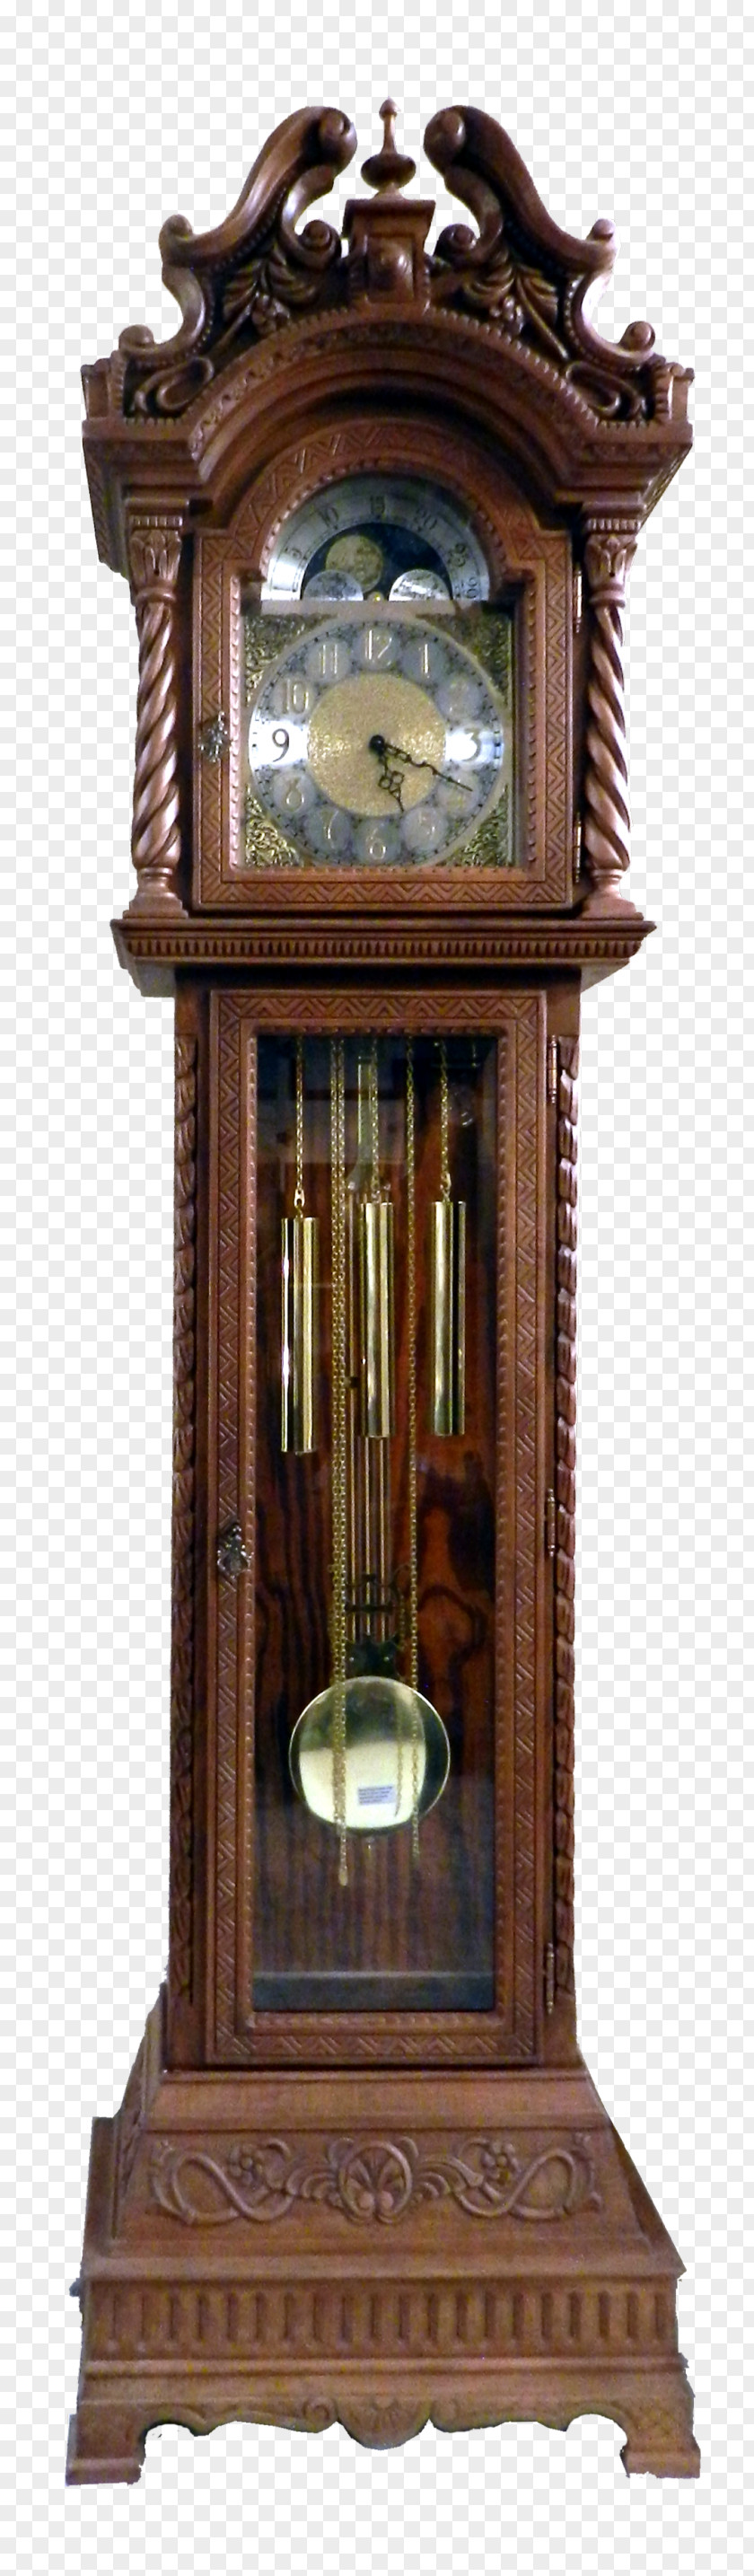 Clock Floor & Grandfather Clocks Hermle Pendulum Mechanism PNG